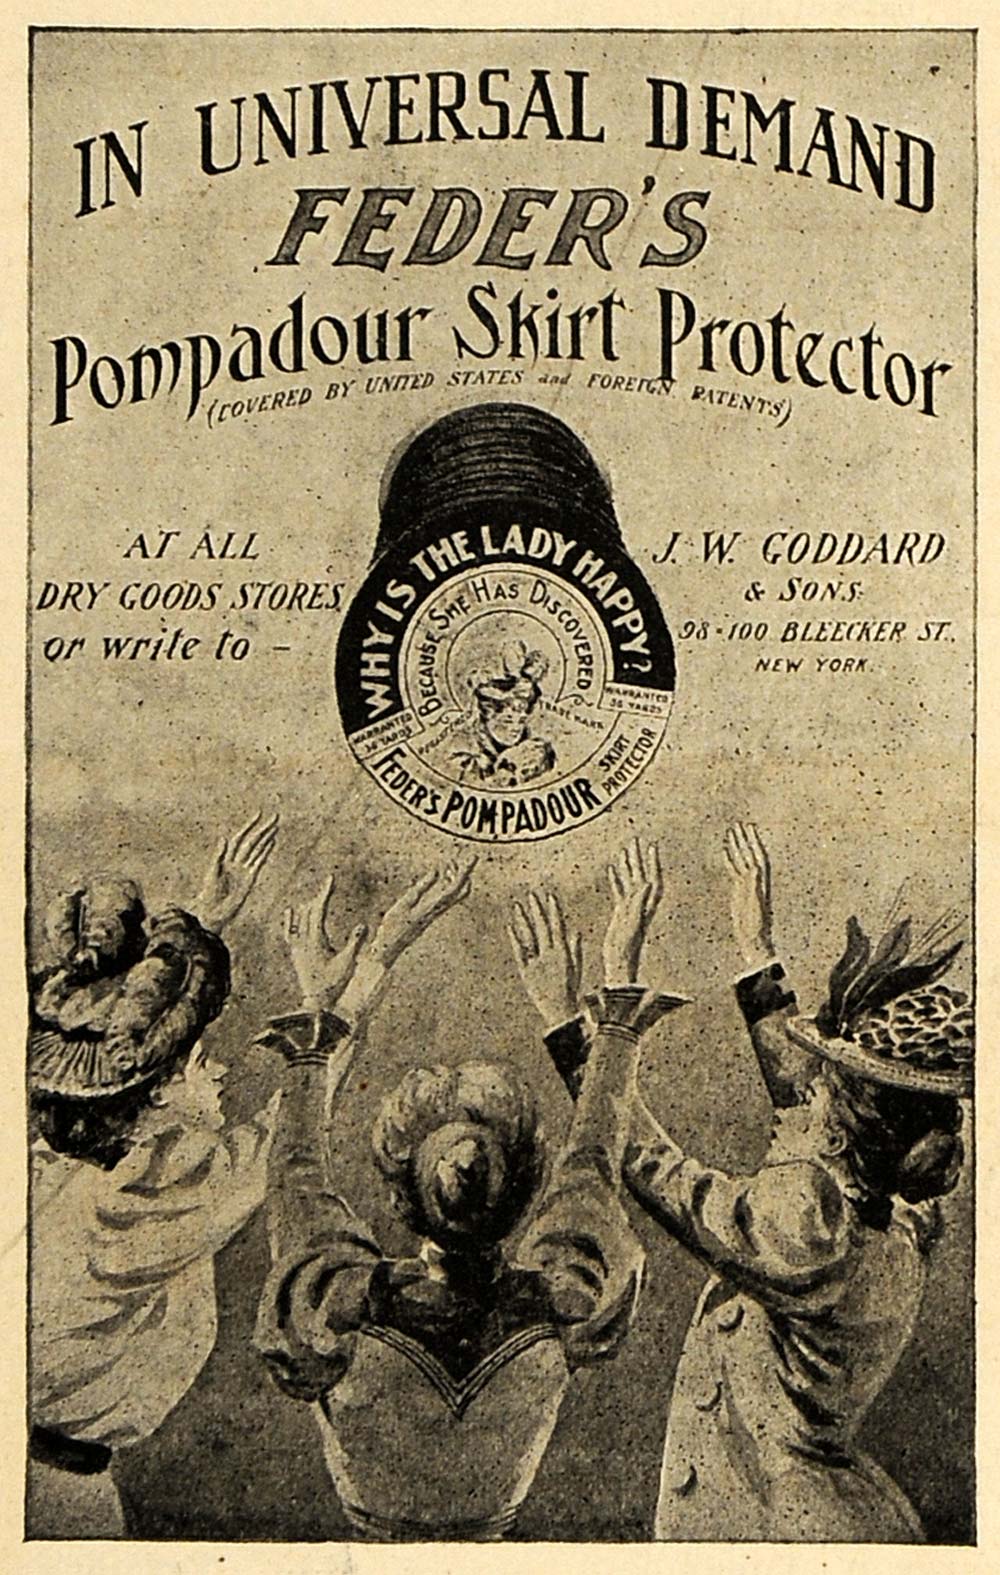 1898 Ad Feder's Pompadour Skirt Protector J. W. Goodard - ORIGINAL TIN4